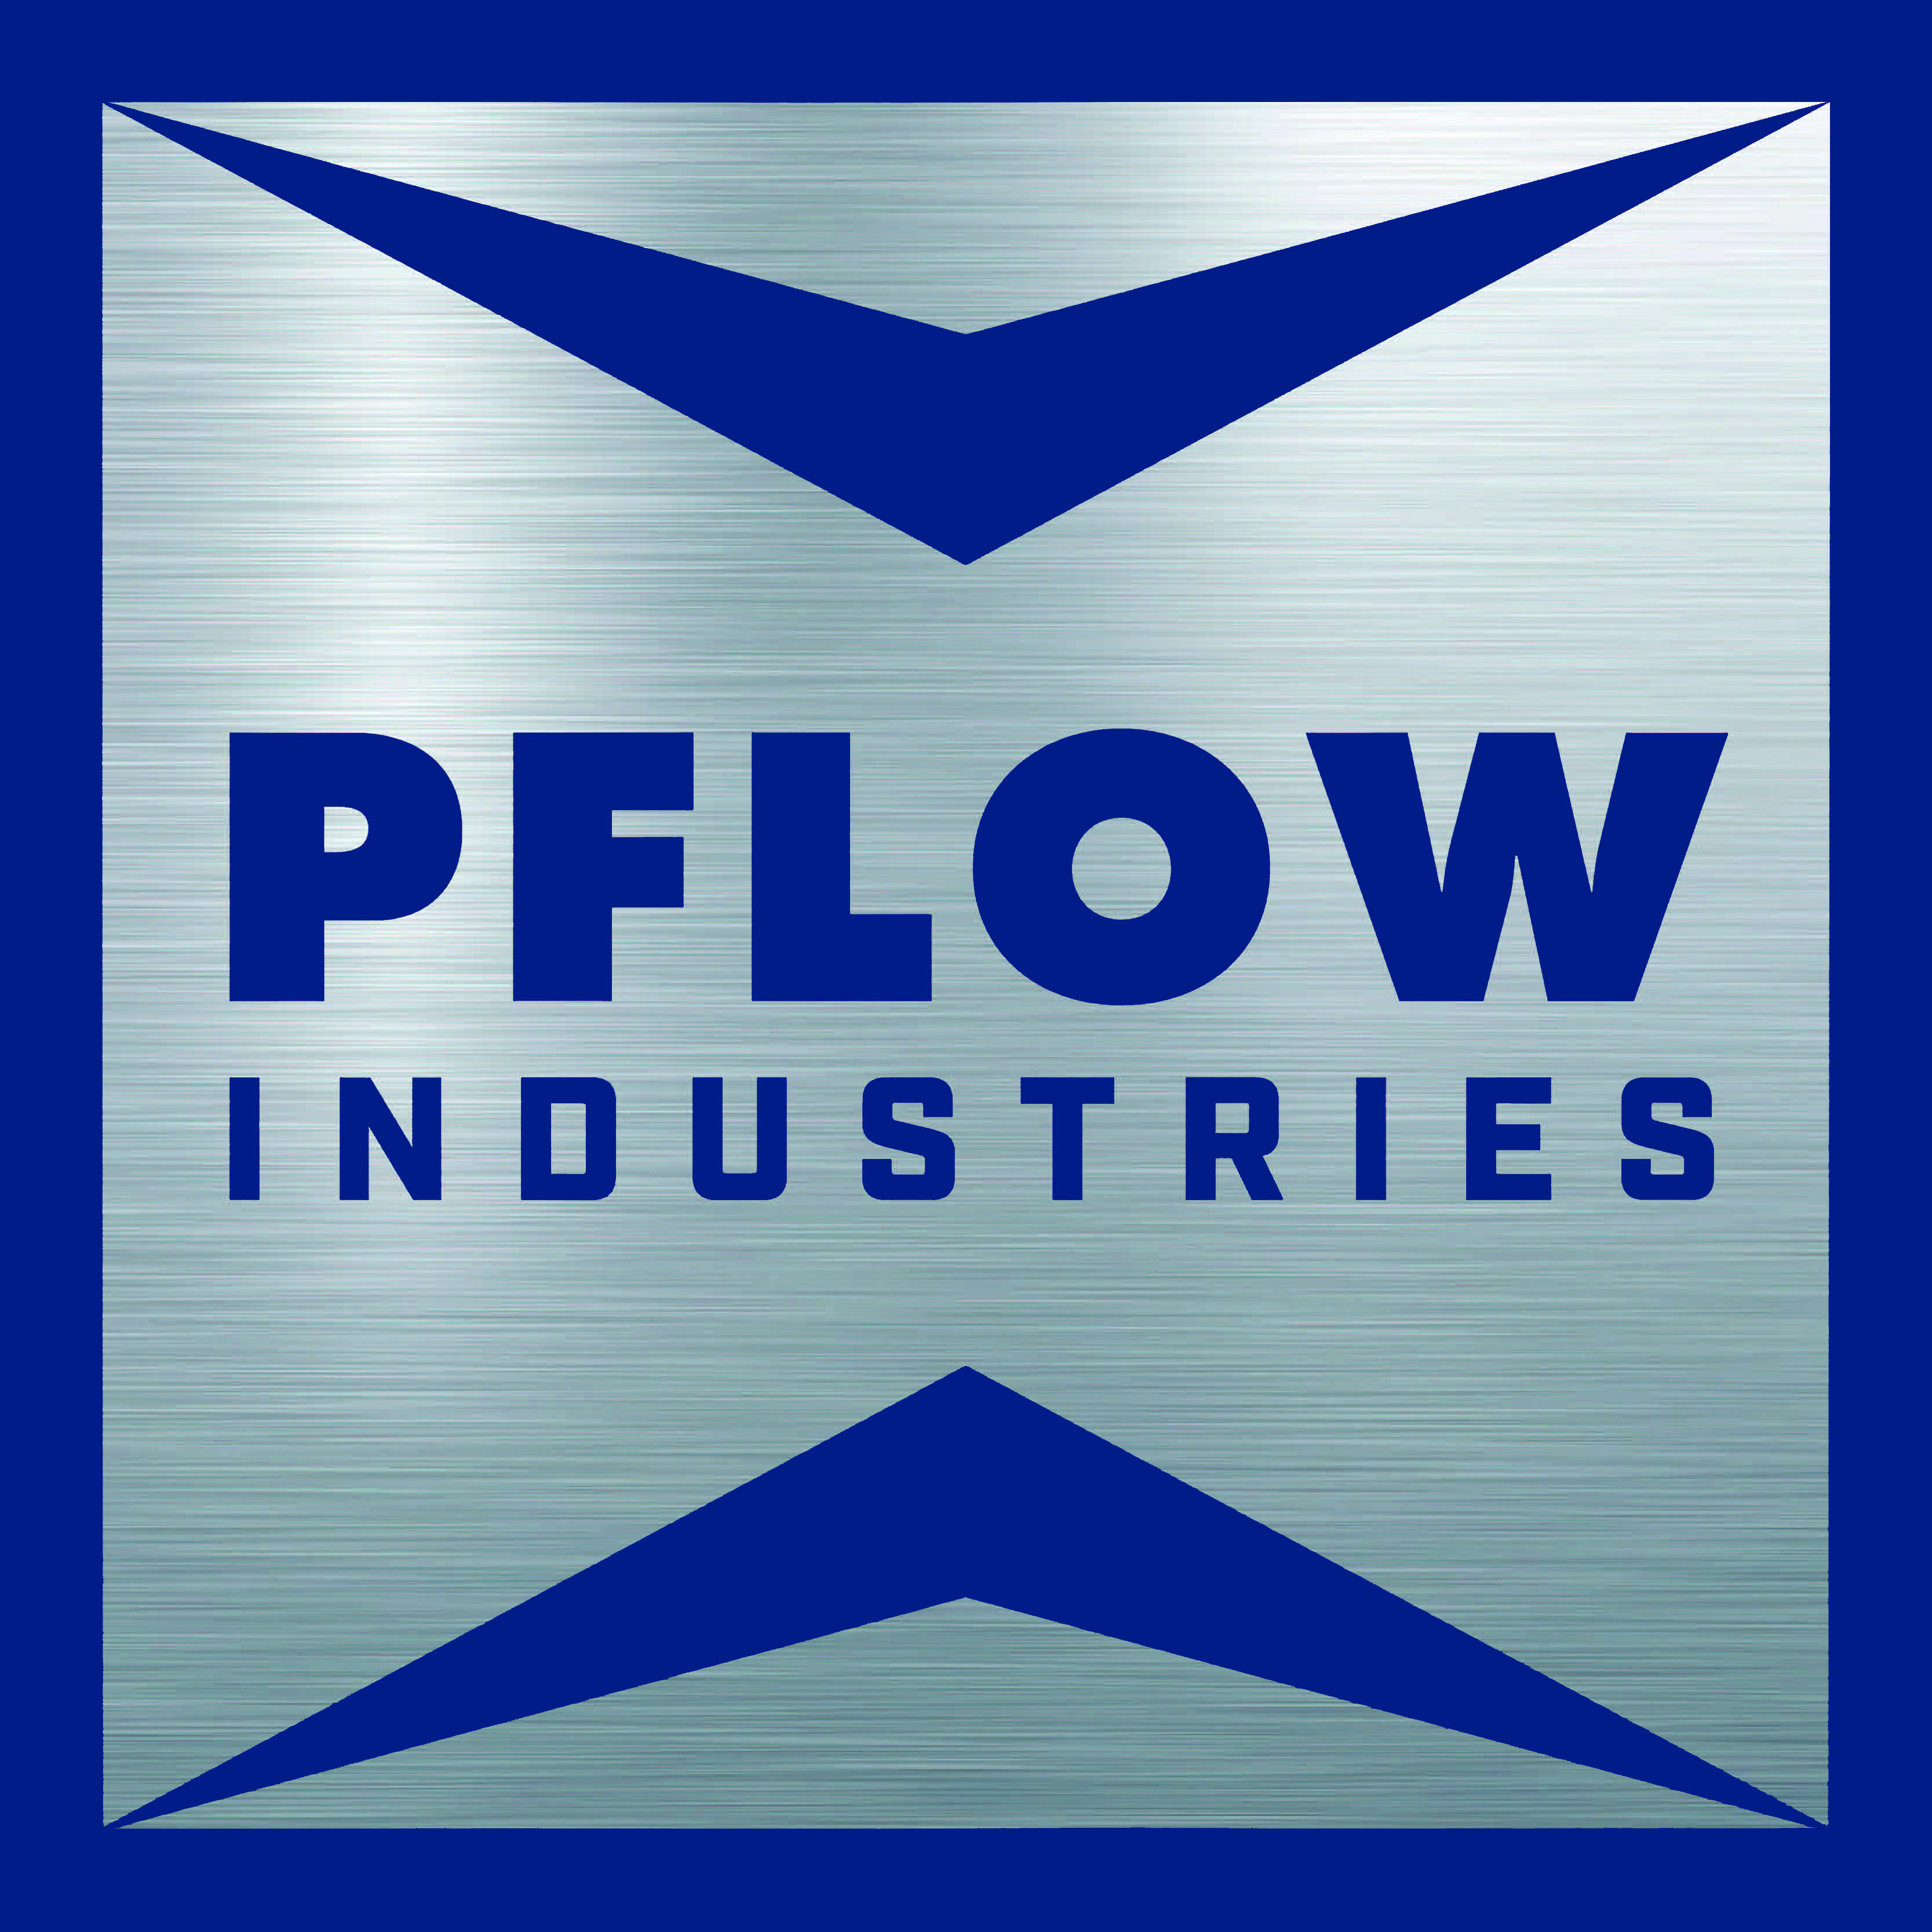 Pflow Industries, Inc.